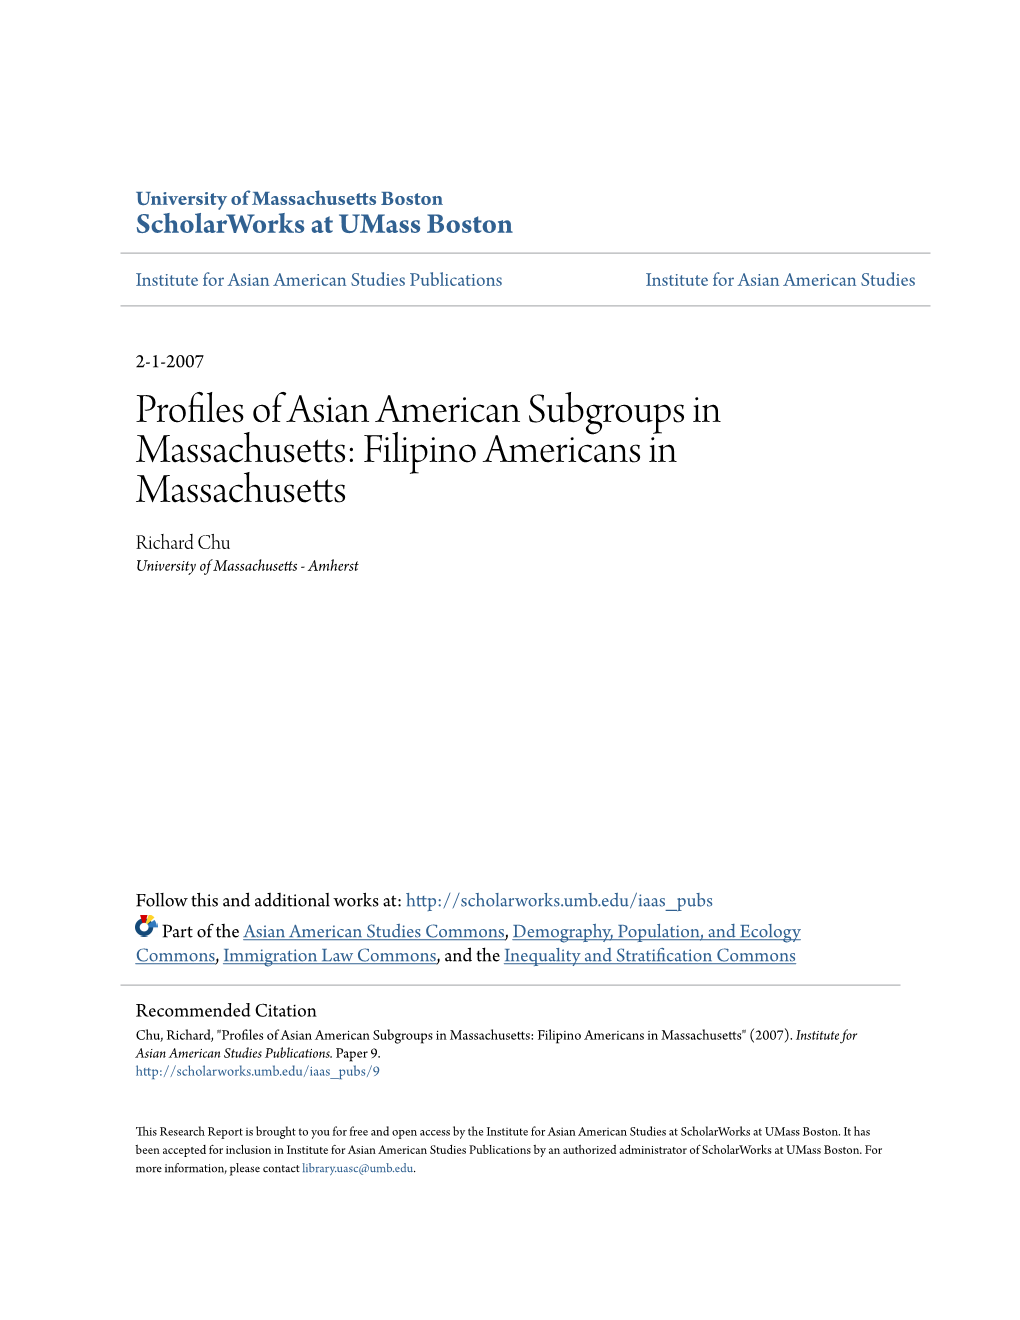 Filipino Americans in Massachusetts Richard Chu University of Massachusetts - Amherst